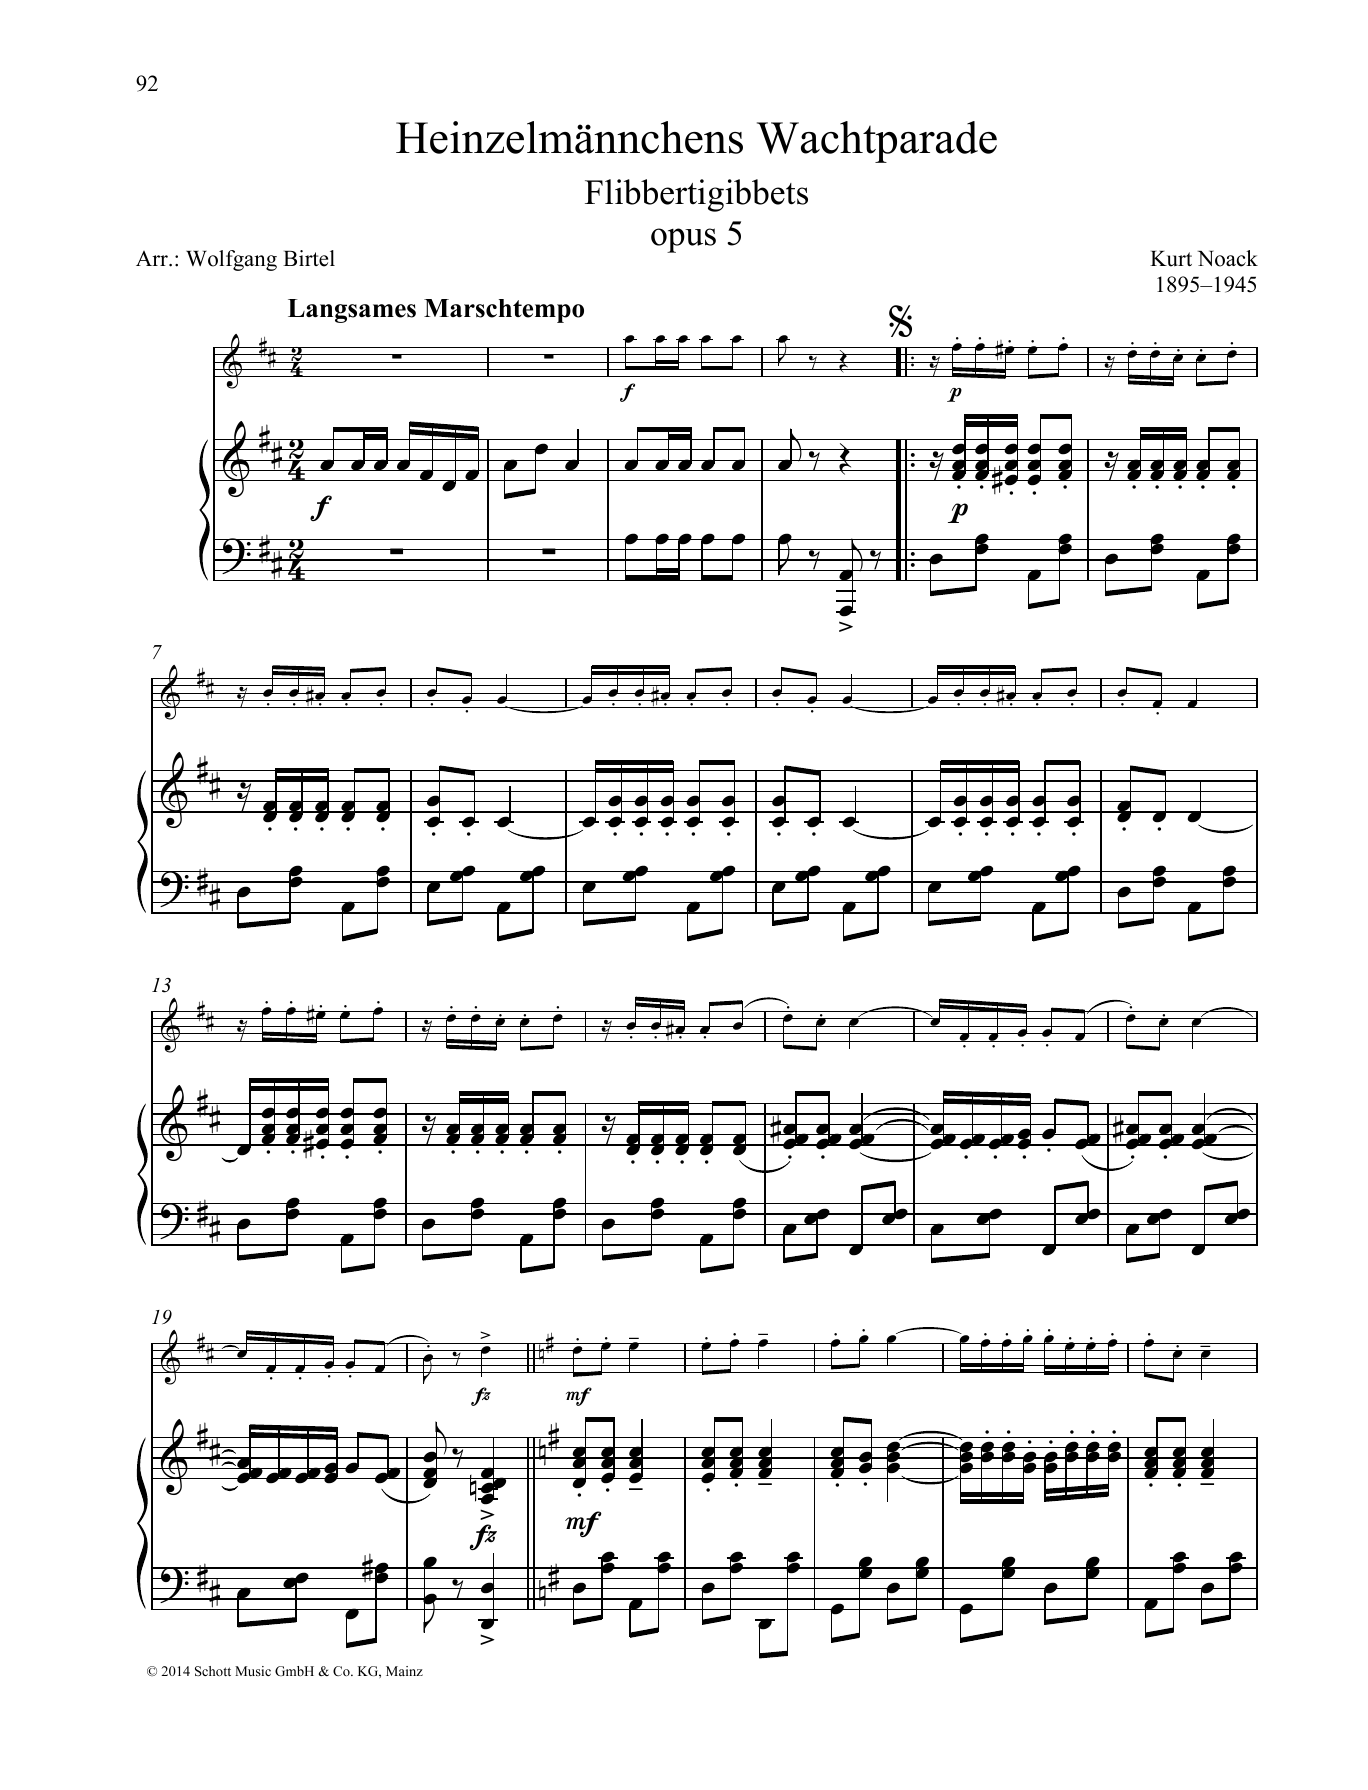 Kurt Noack Flibbertigibbets Sheet Music Notes & Chords for String Solo - Download or Print PDF